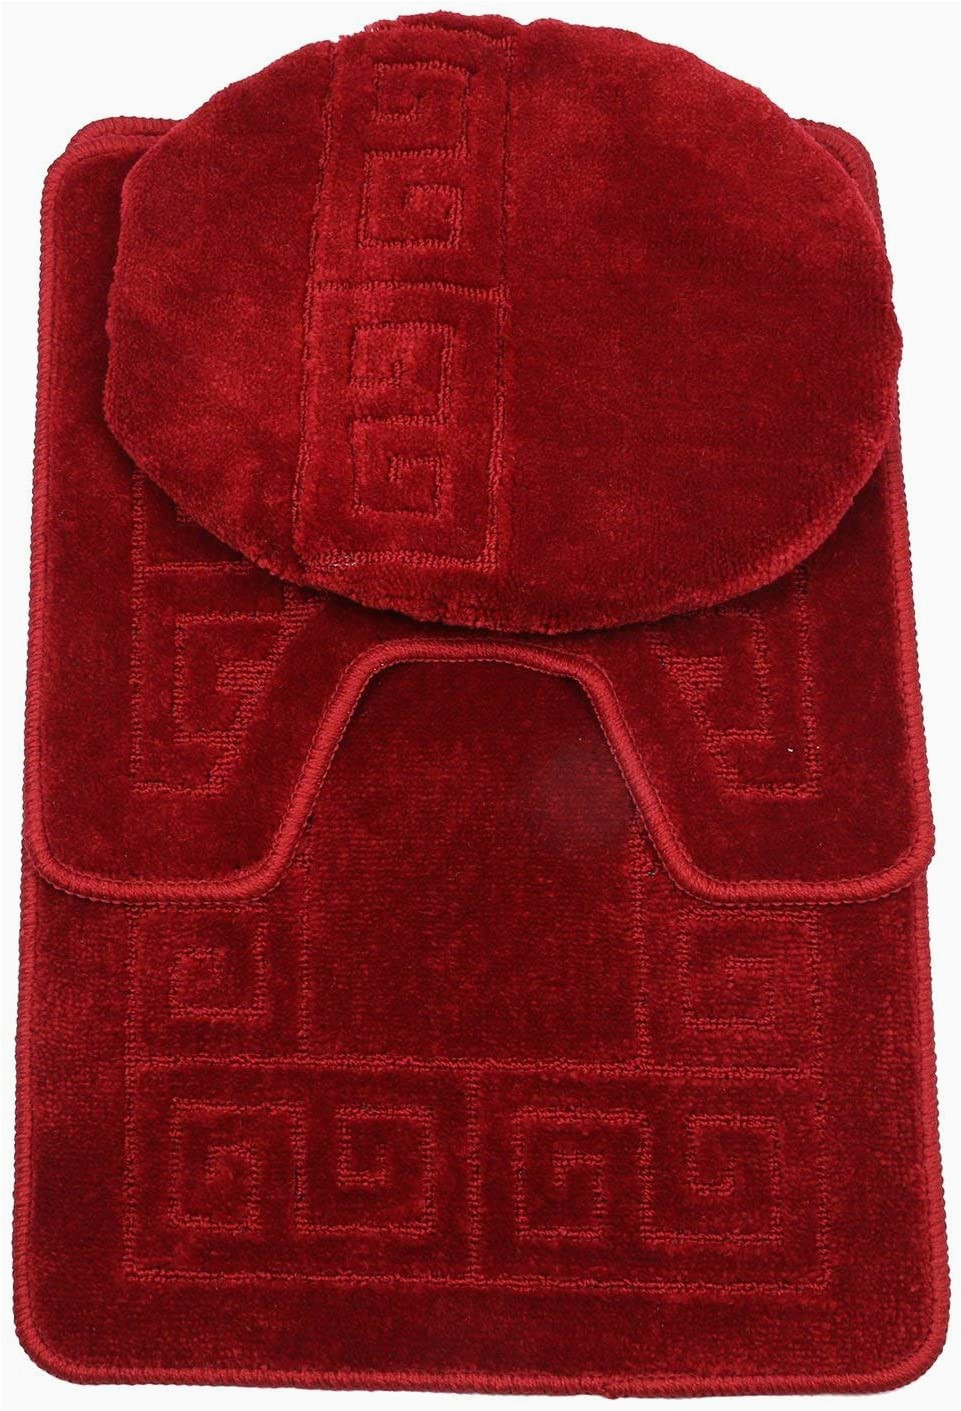 Red Bath Rug Set 3 Piece Bath Rug Set Pattern Bathroom Rug 20"x32" Contour Mat 20"x20" with Lid Cover Burgundy